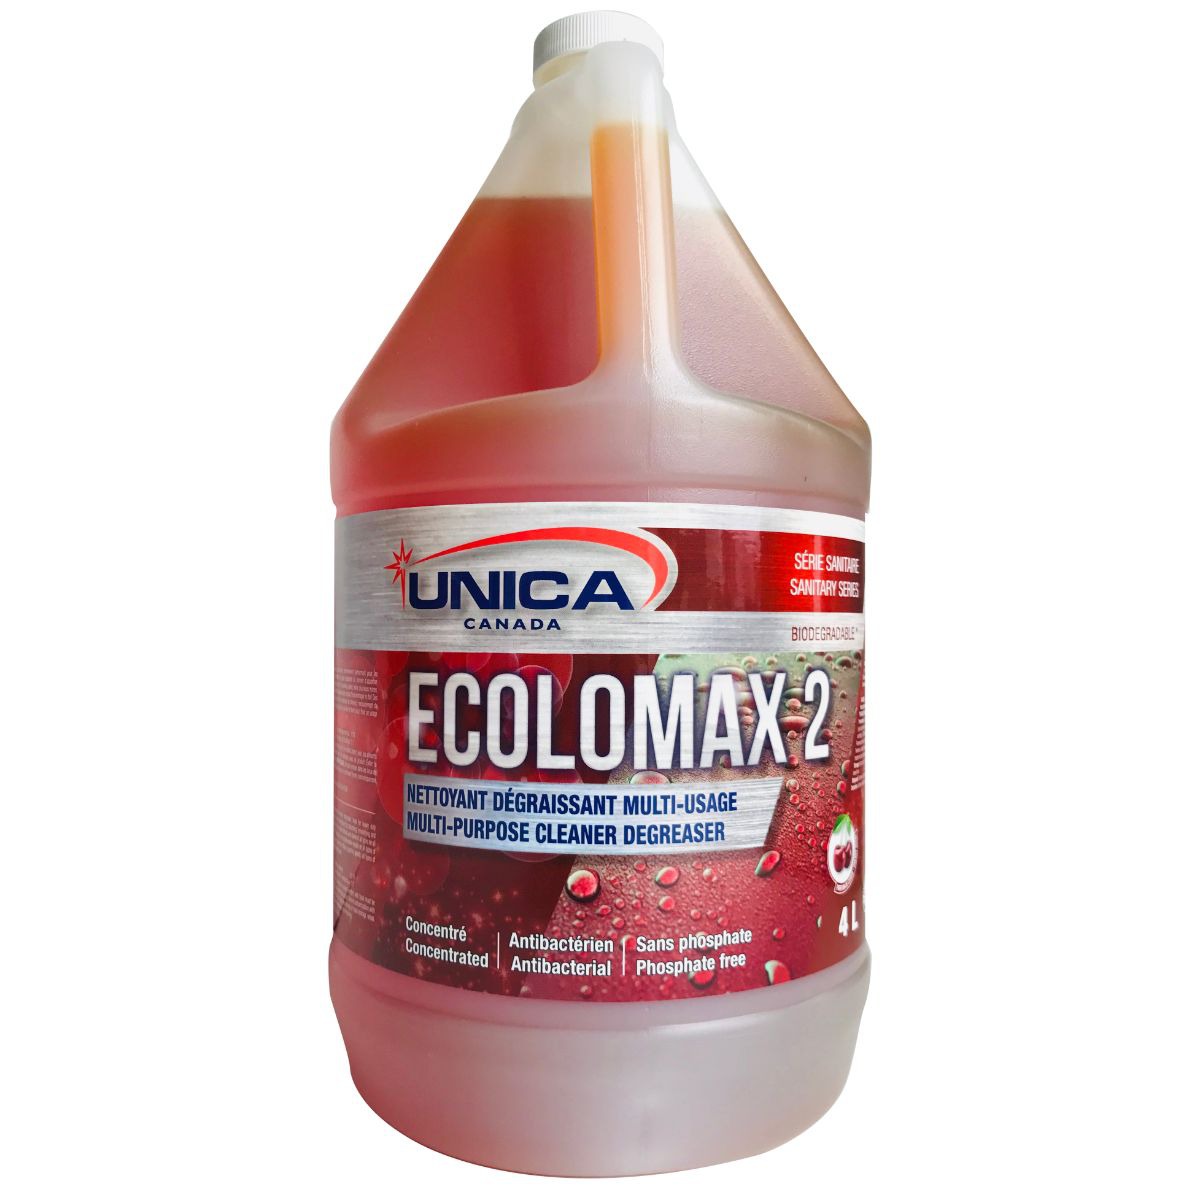 Ecolomax 2